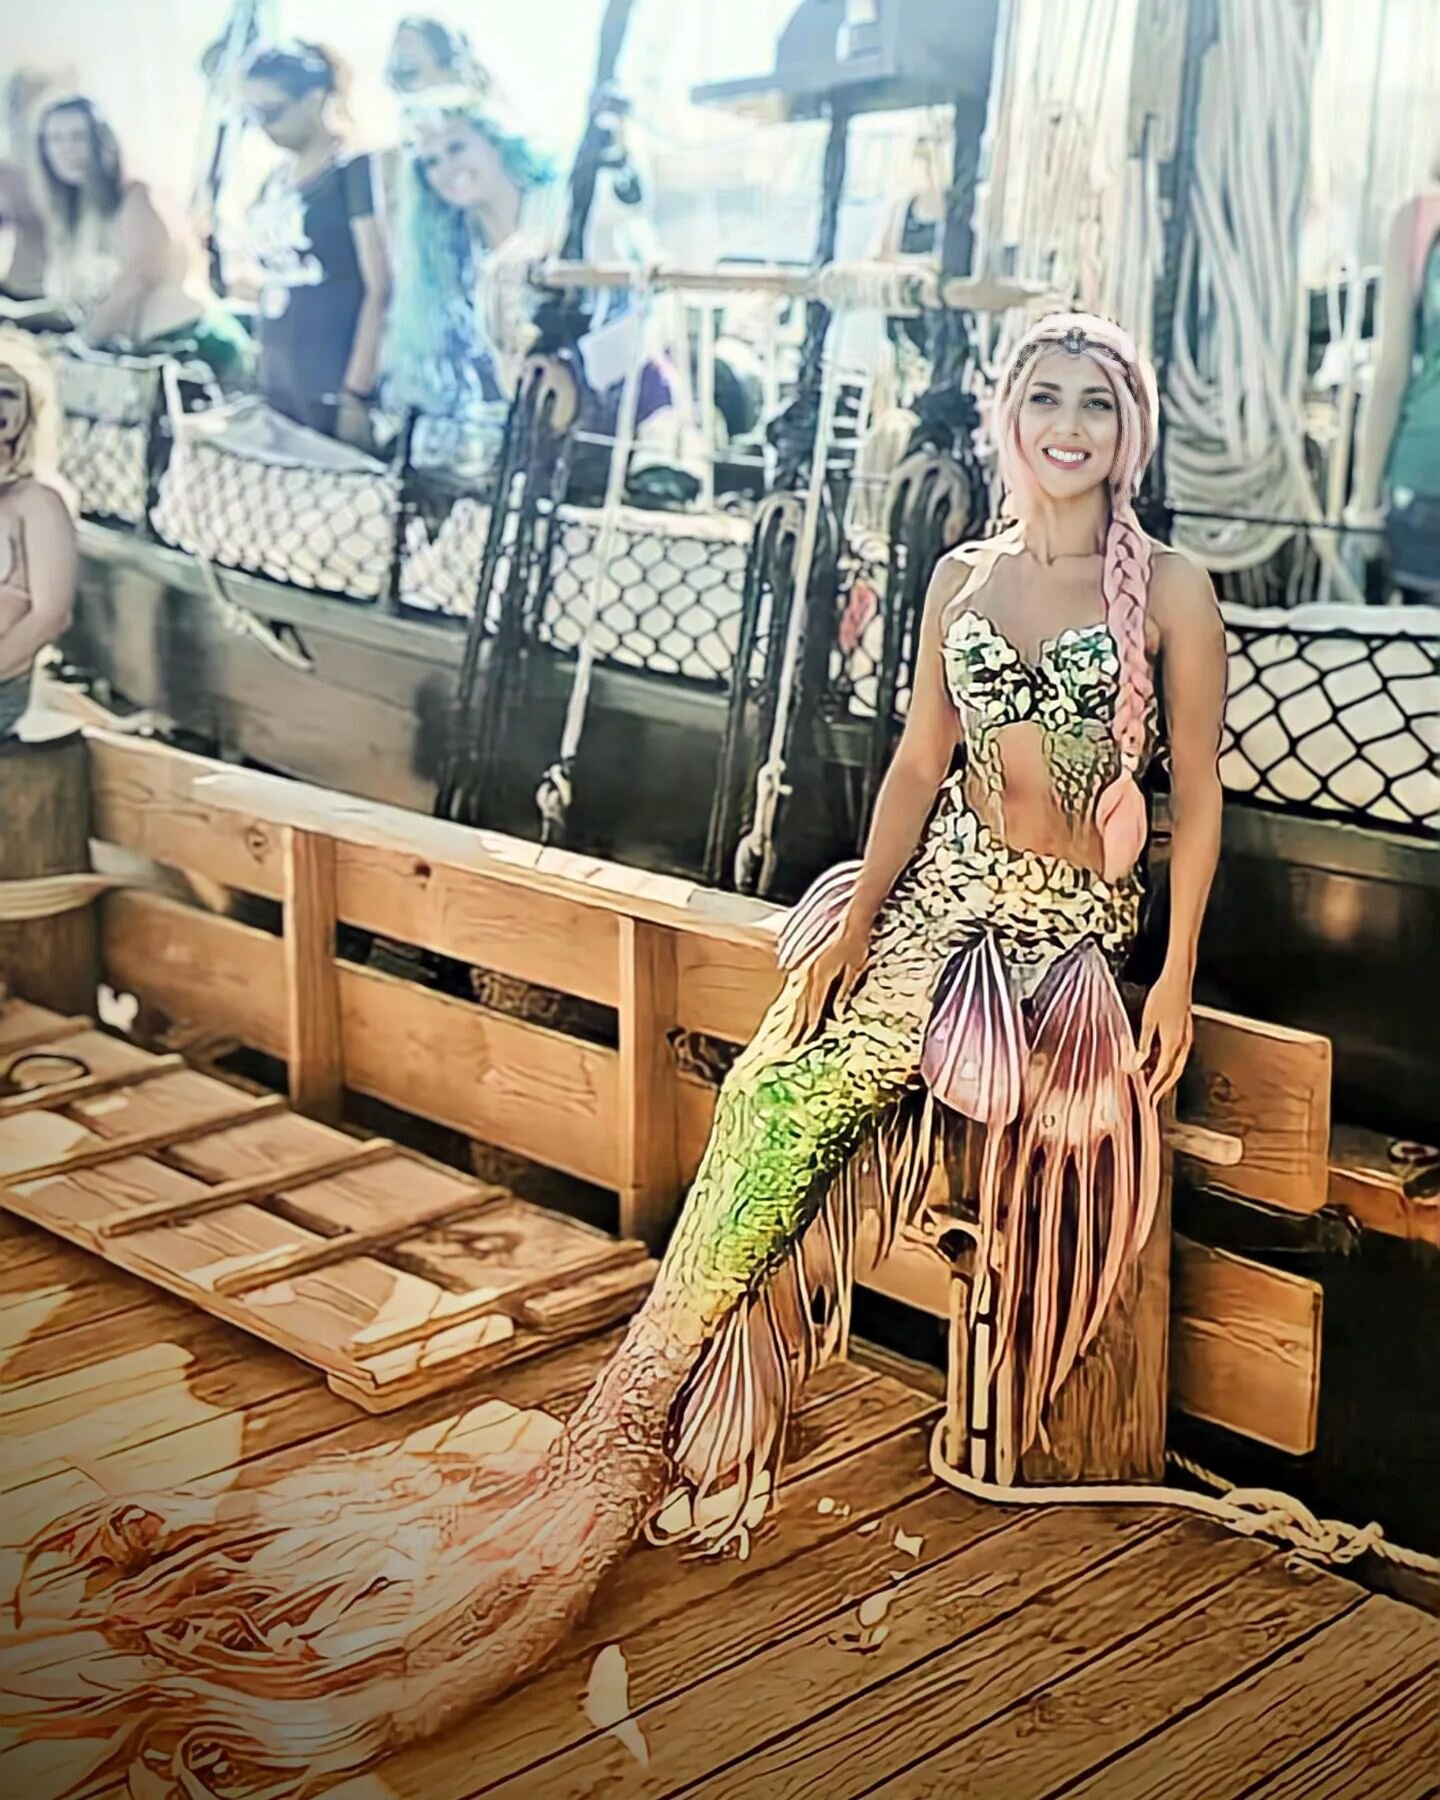 Welcome aboard, pirates!
🧜🏽&zwj;♀️💦⛵
#mermaidforhire #mermaid #hannnahmermaid #mermaidtail #mermaidmodel 

Mermaid: @hannahmermaid
Fin deco: @aliciaunderwater